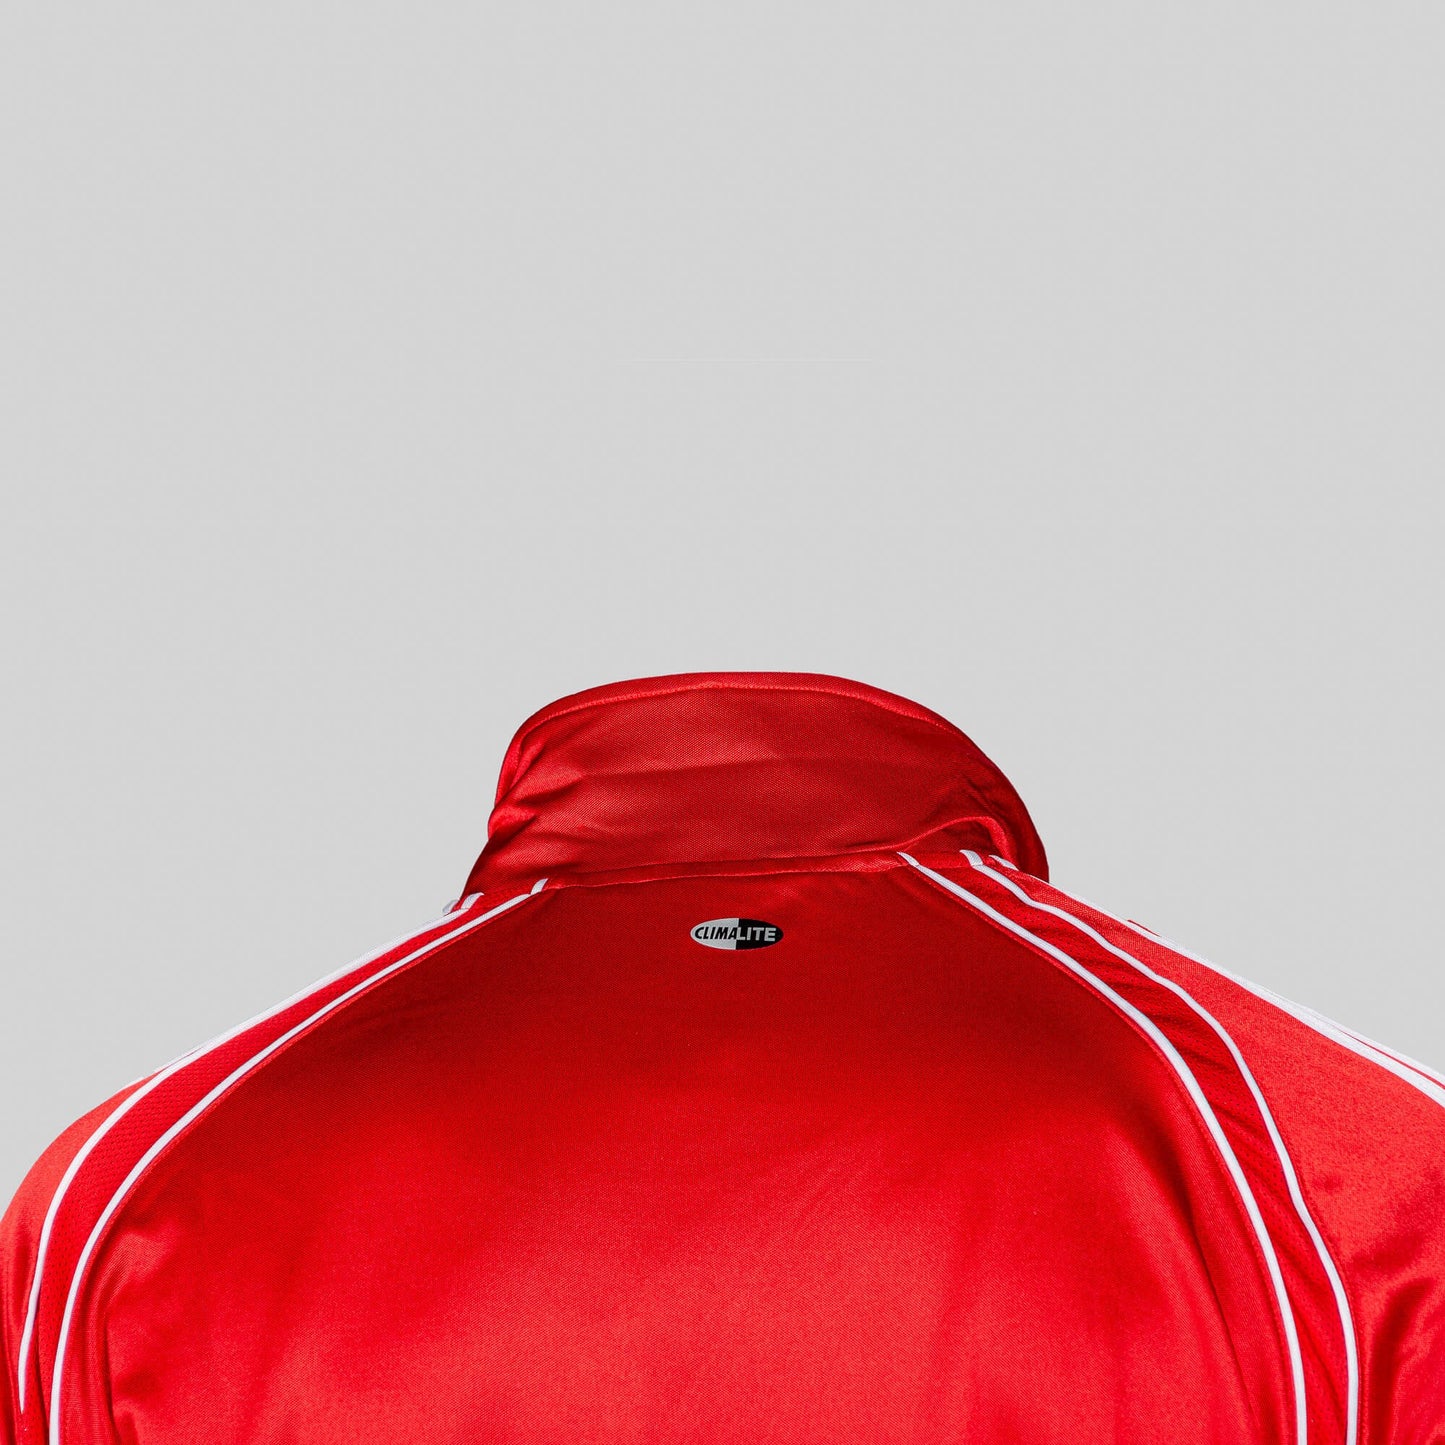 Adidas Performance Jacket Red/White (červená)